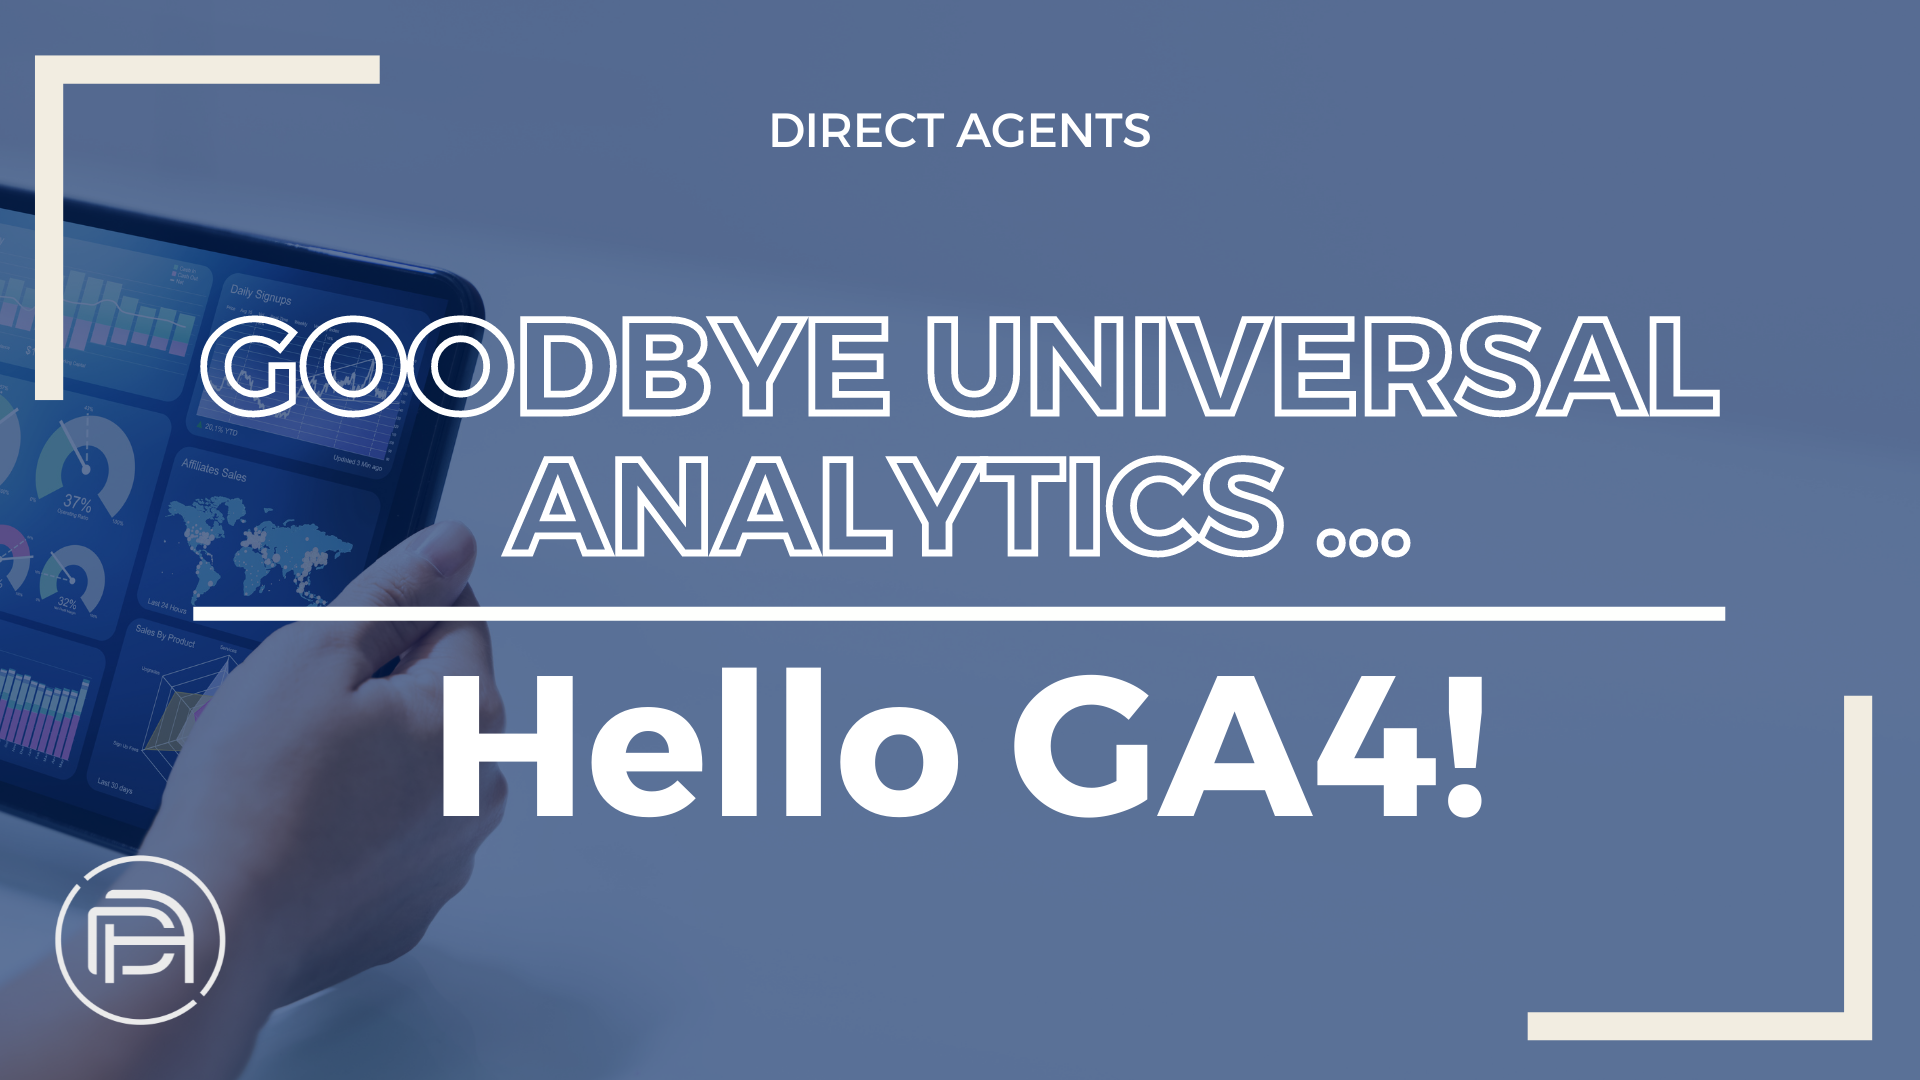 Goodbye Universal Analytics … Hello GA4!